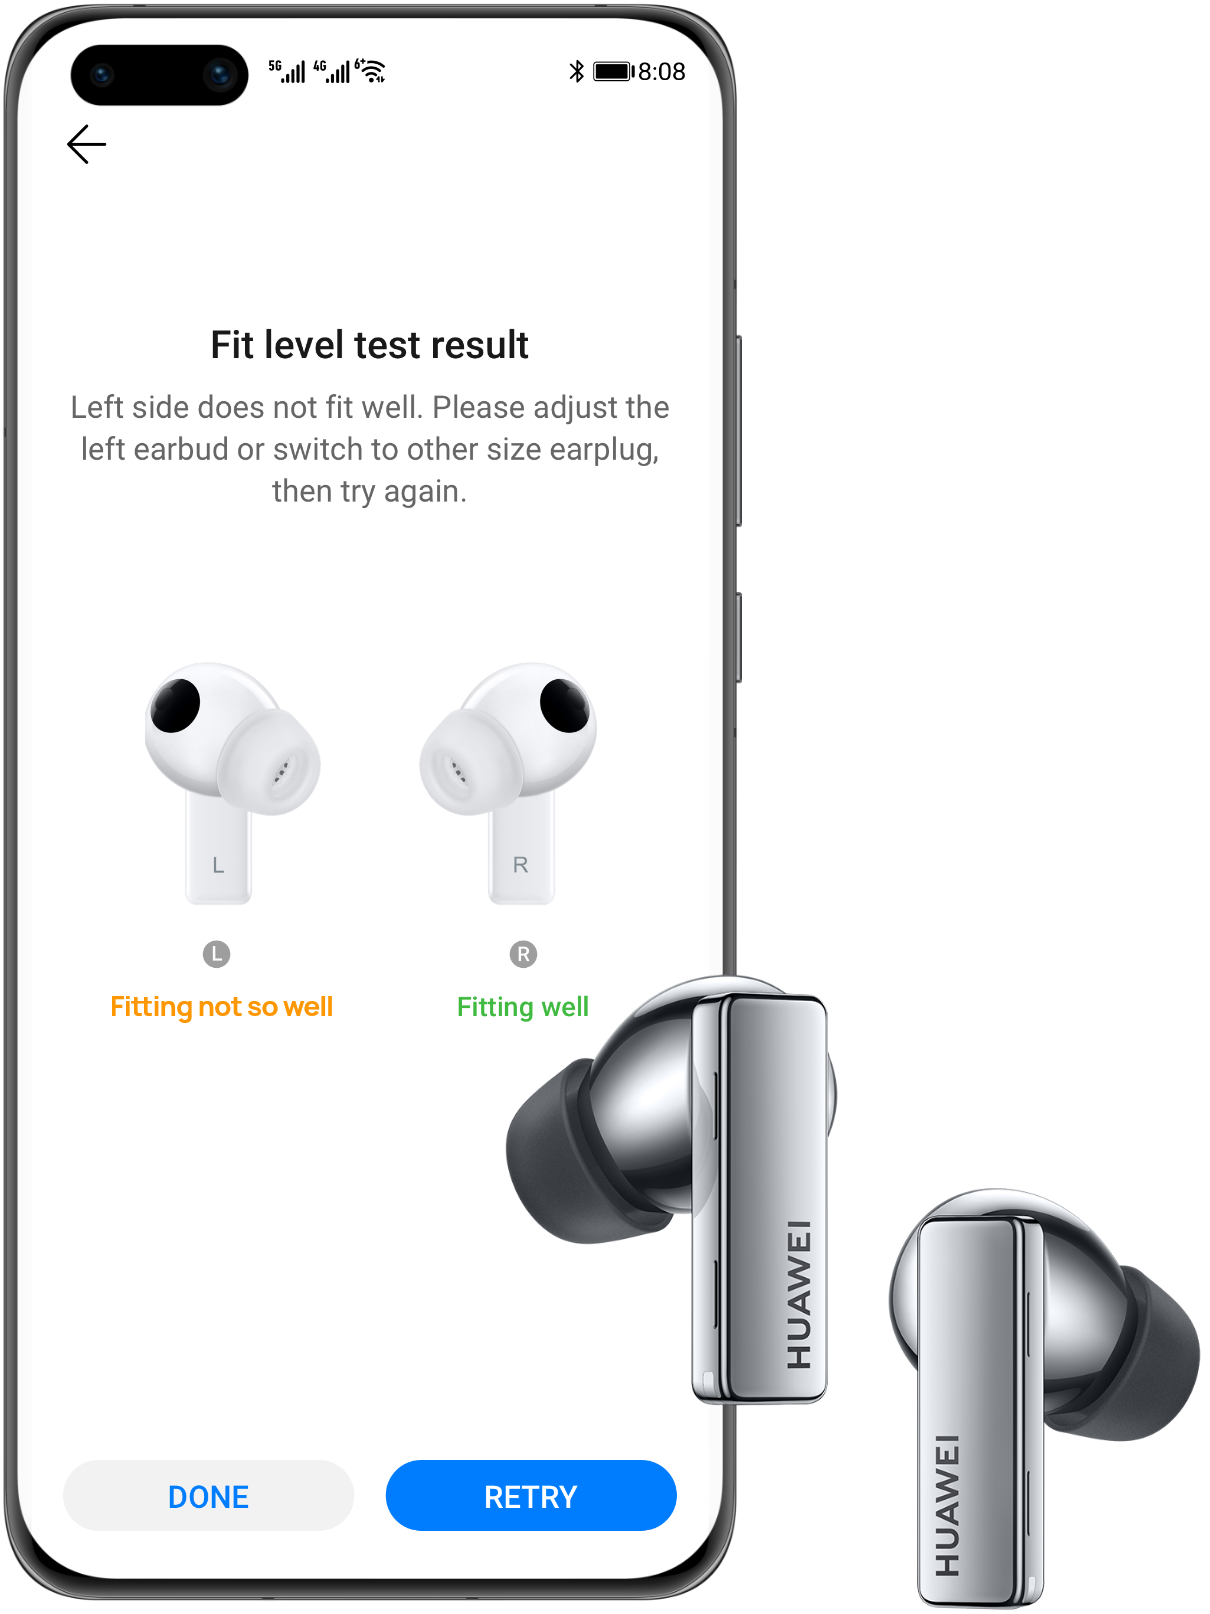 Huawei freebuds pro True Wireless Wireless Earbuds Redefine Noise  Cancellation